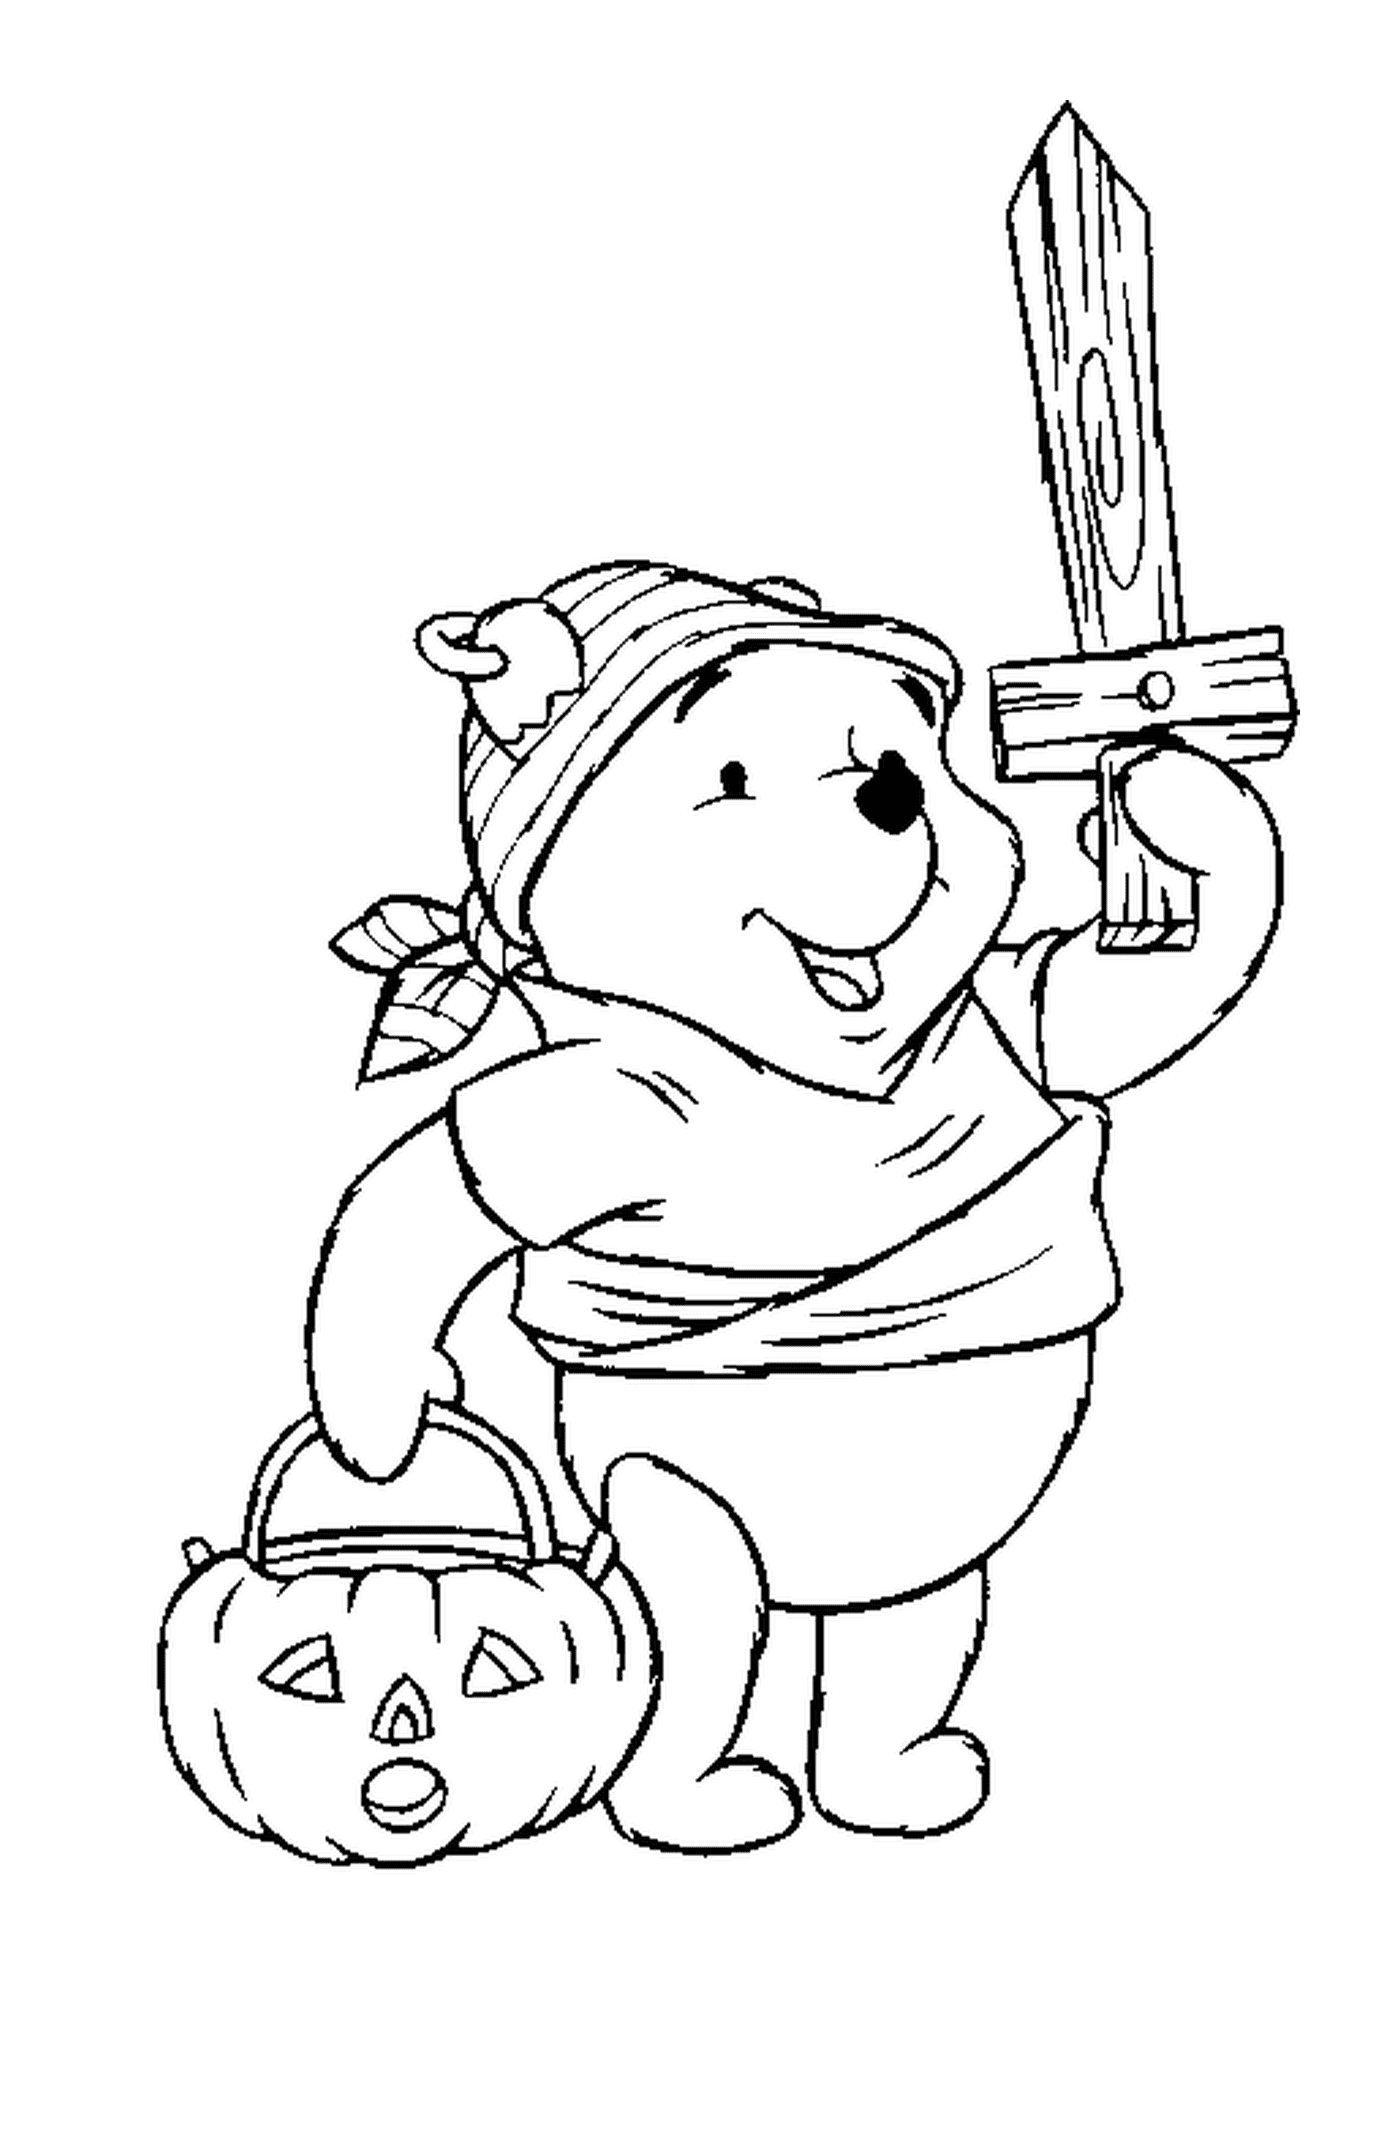  Winnie el oso en Halloween 